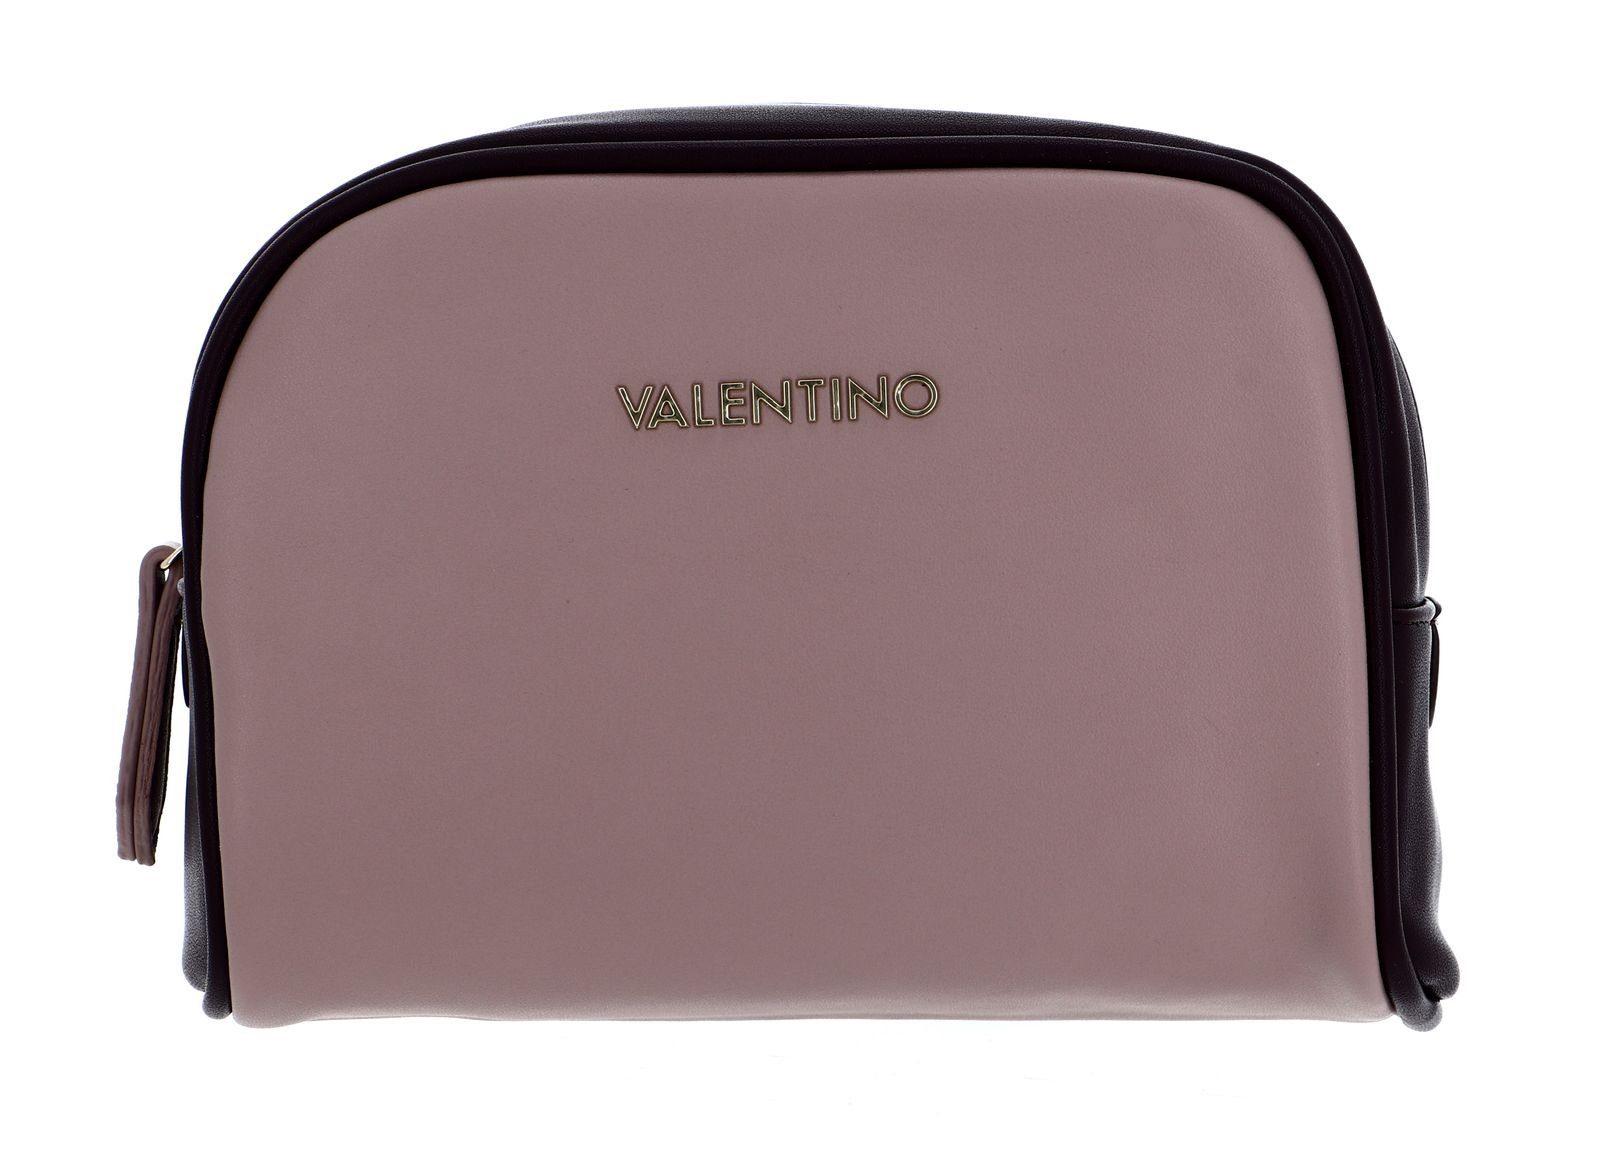 Sonderverkauf auf VALENTINO BAGS Kosmetiktasche Rosa Rossio / Multi